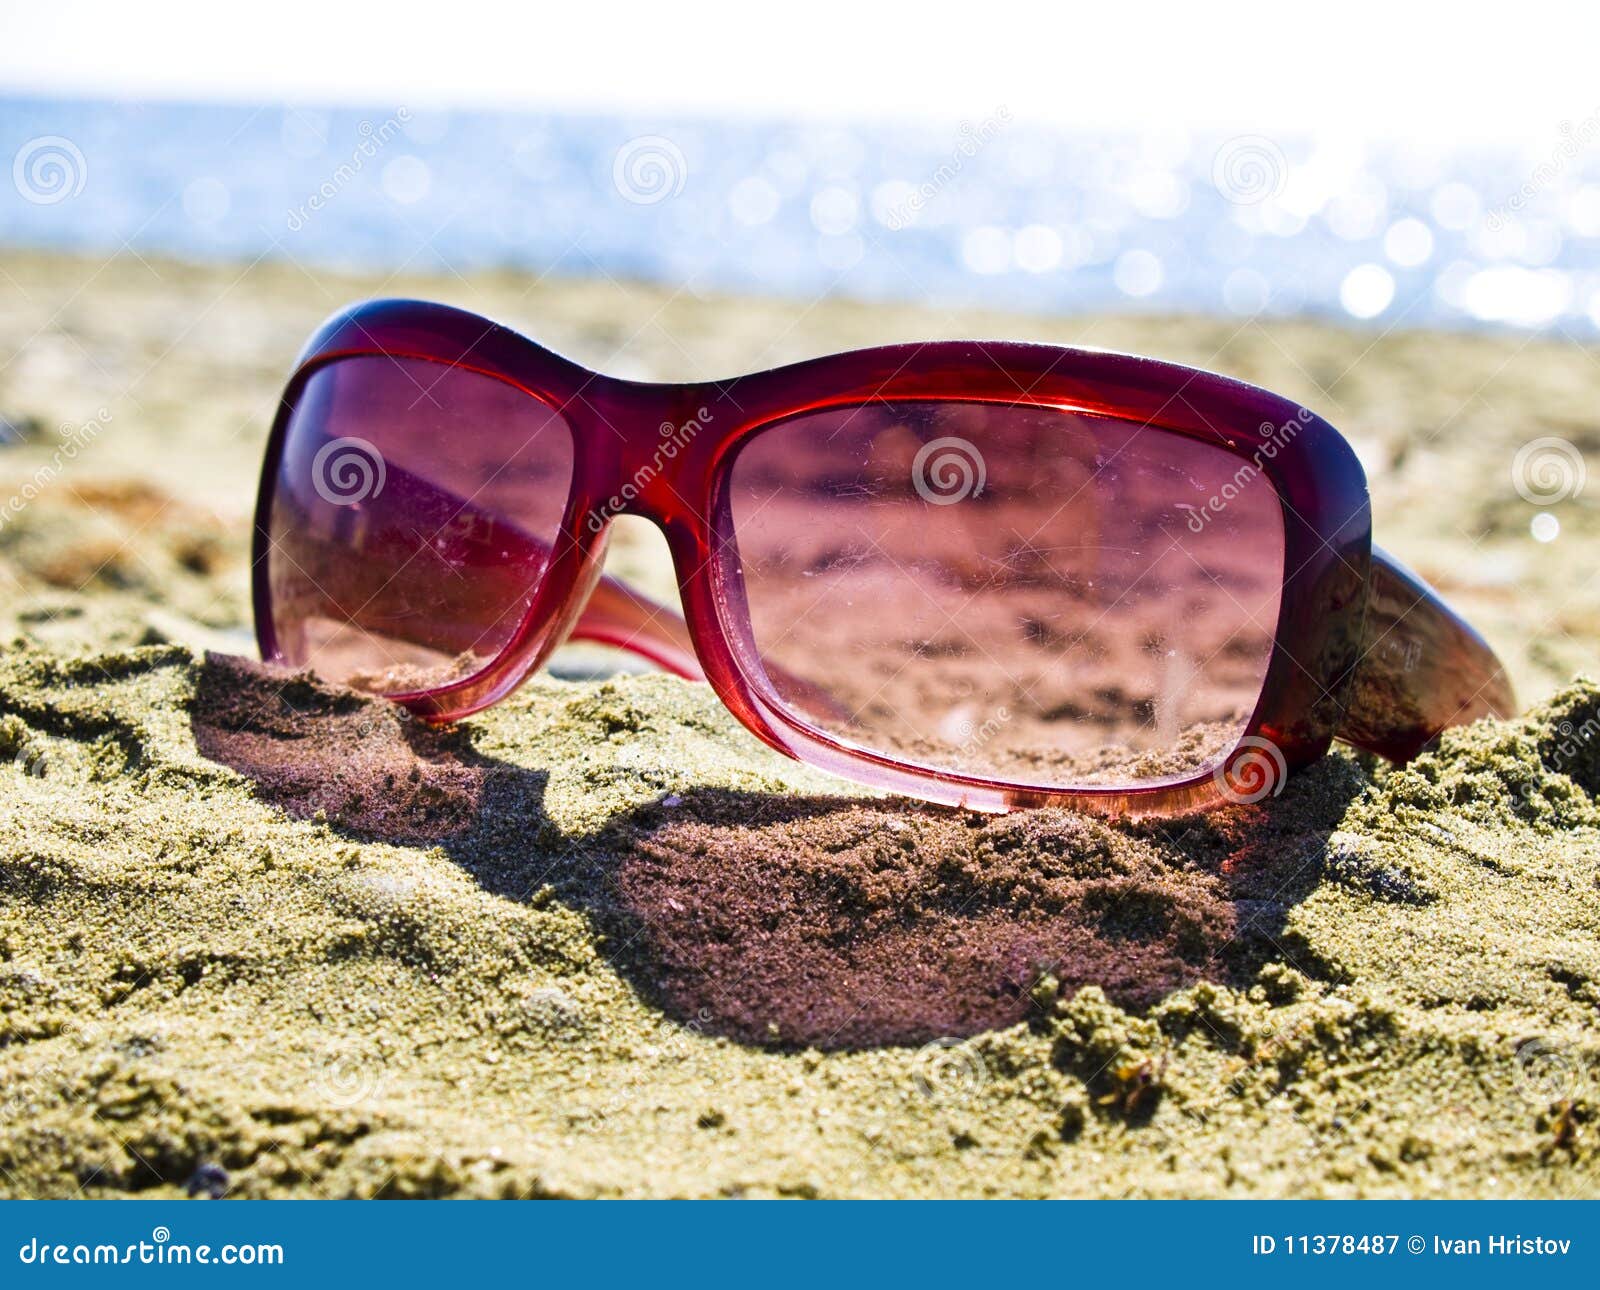 Forgotten Sunglasses on the Beach Stock Image - Image of dark, rays ...